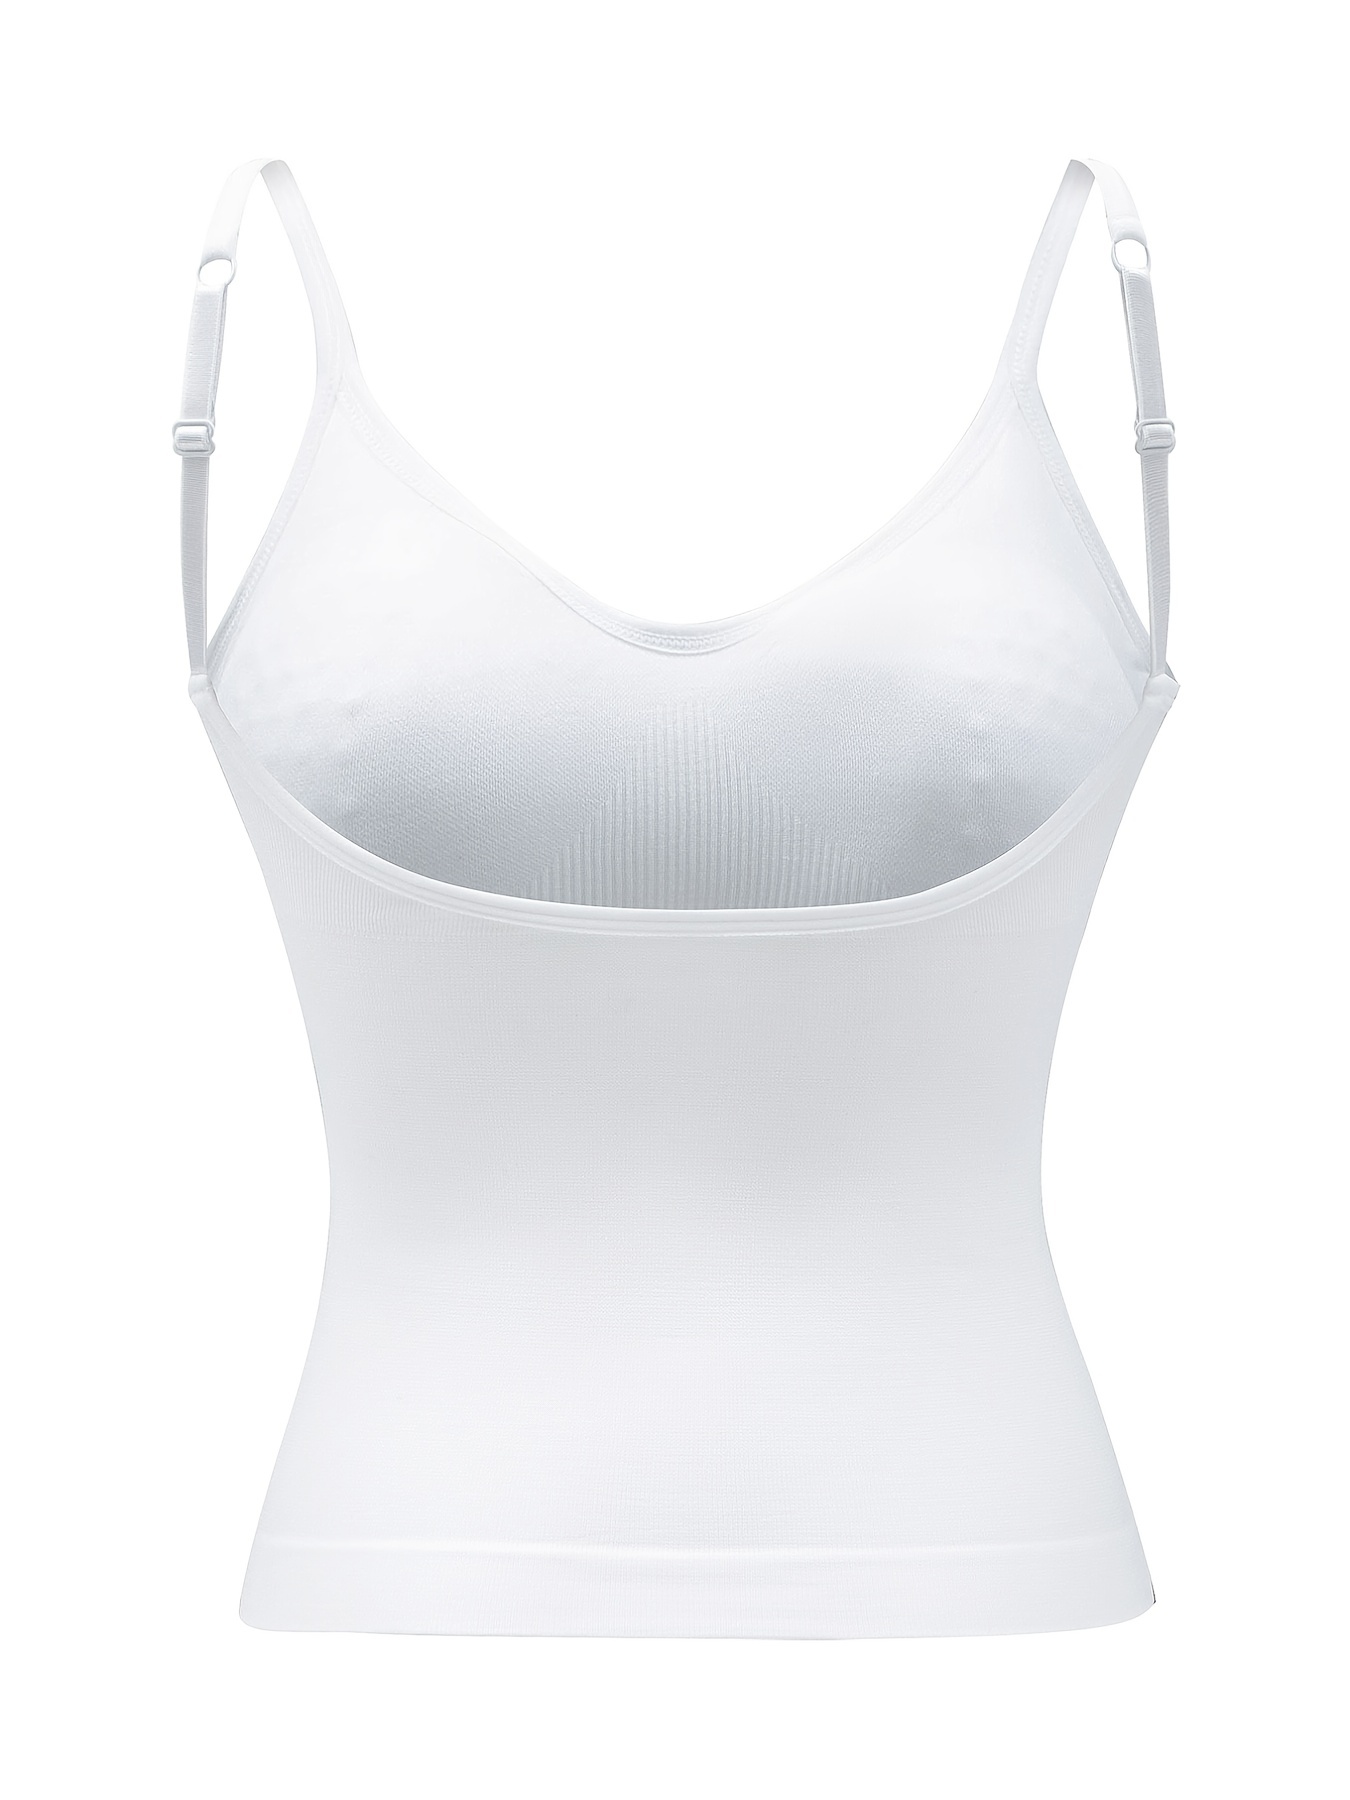 EHTMSAK Camisole for Women Shelf Bra Adjustable Ultra-Thin Bras for Women  No Underwire Cooling Seamless T-Shirt Bras for Women No Underwire Plus Size